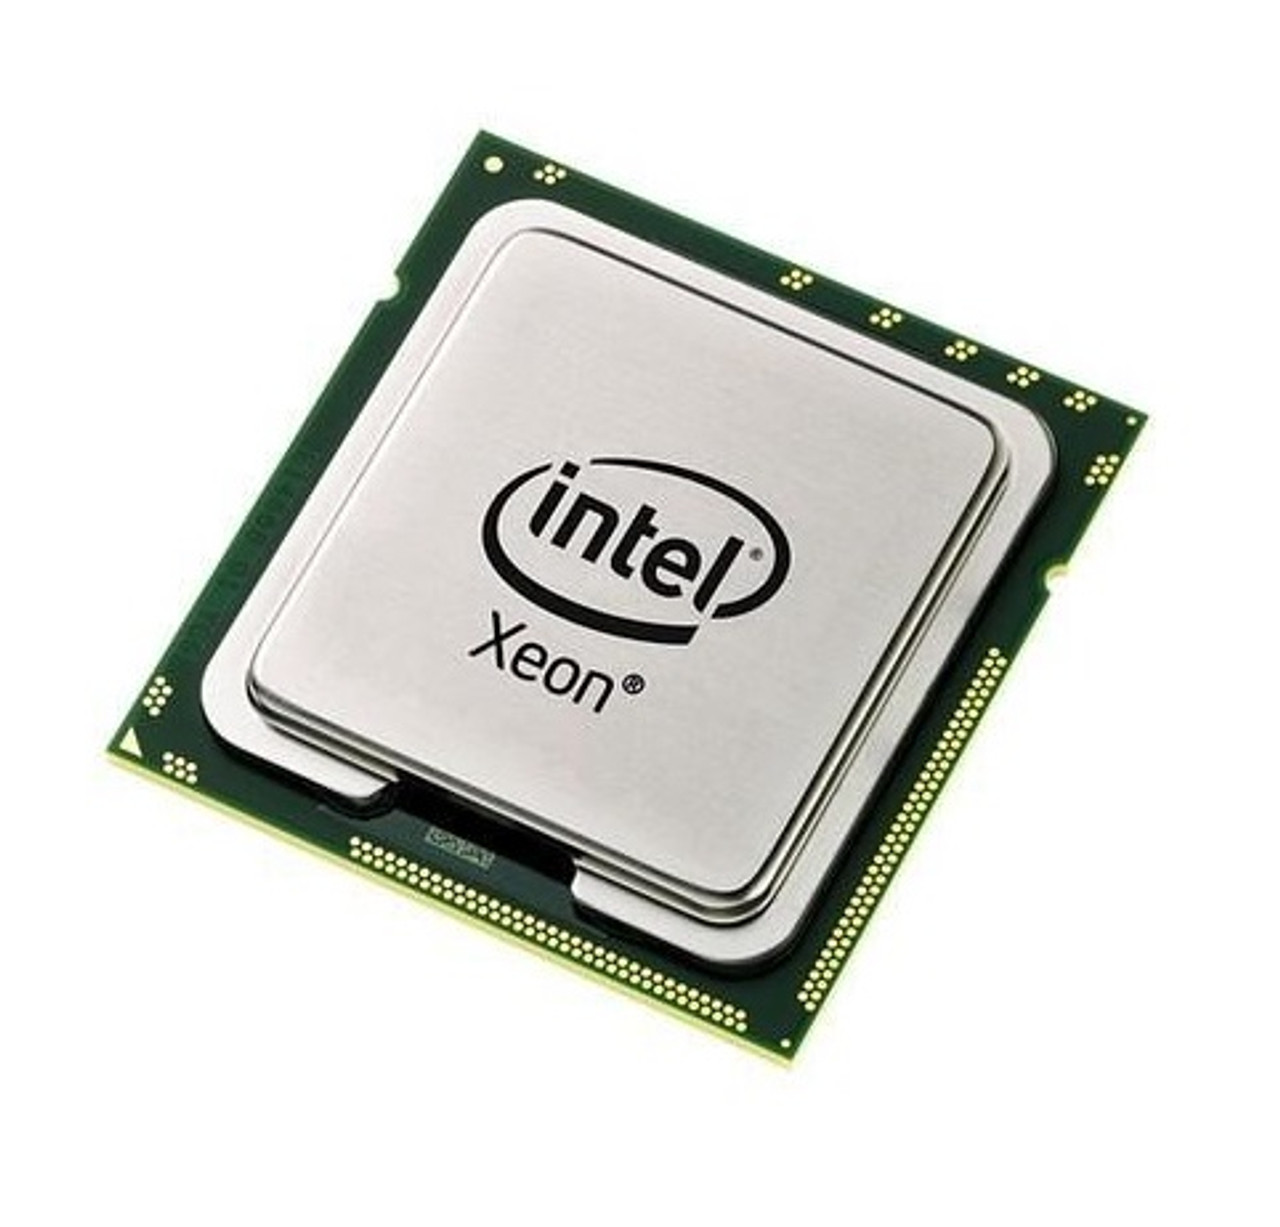 BX80536L5320A - Intel Xeon L5320 Quad Core 1.86GHz 1066MHz FSB 8MB L2 Cache Socket PLGA771 Processor